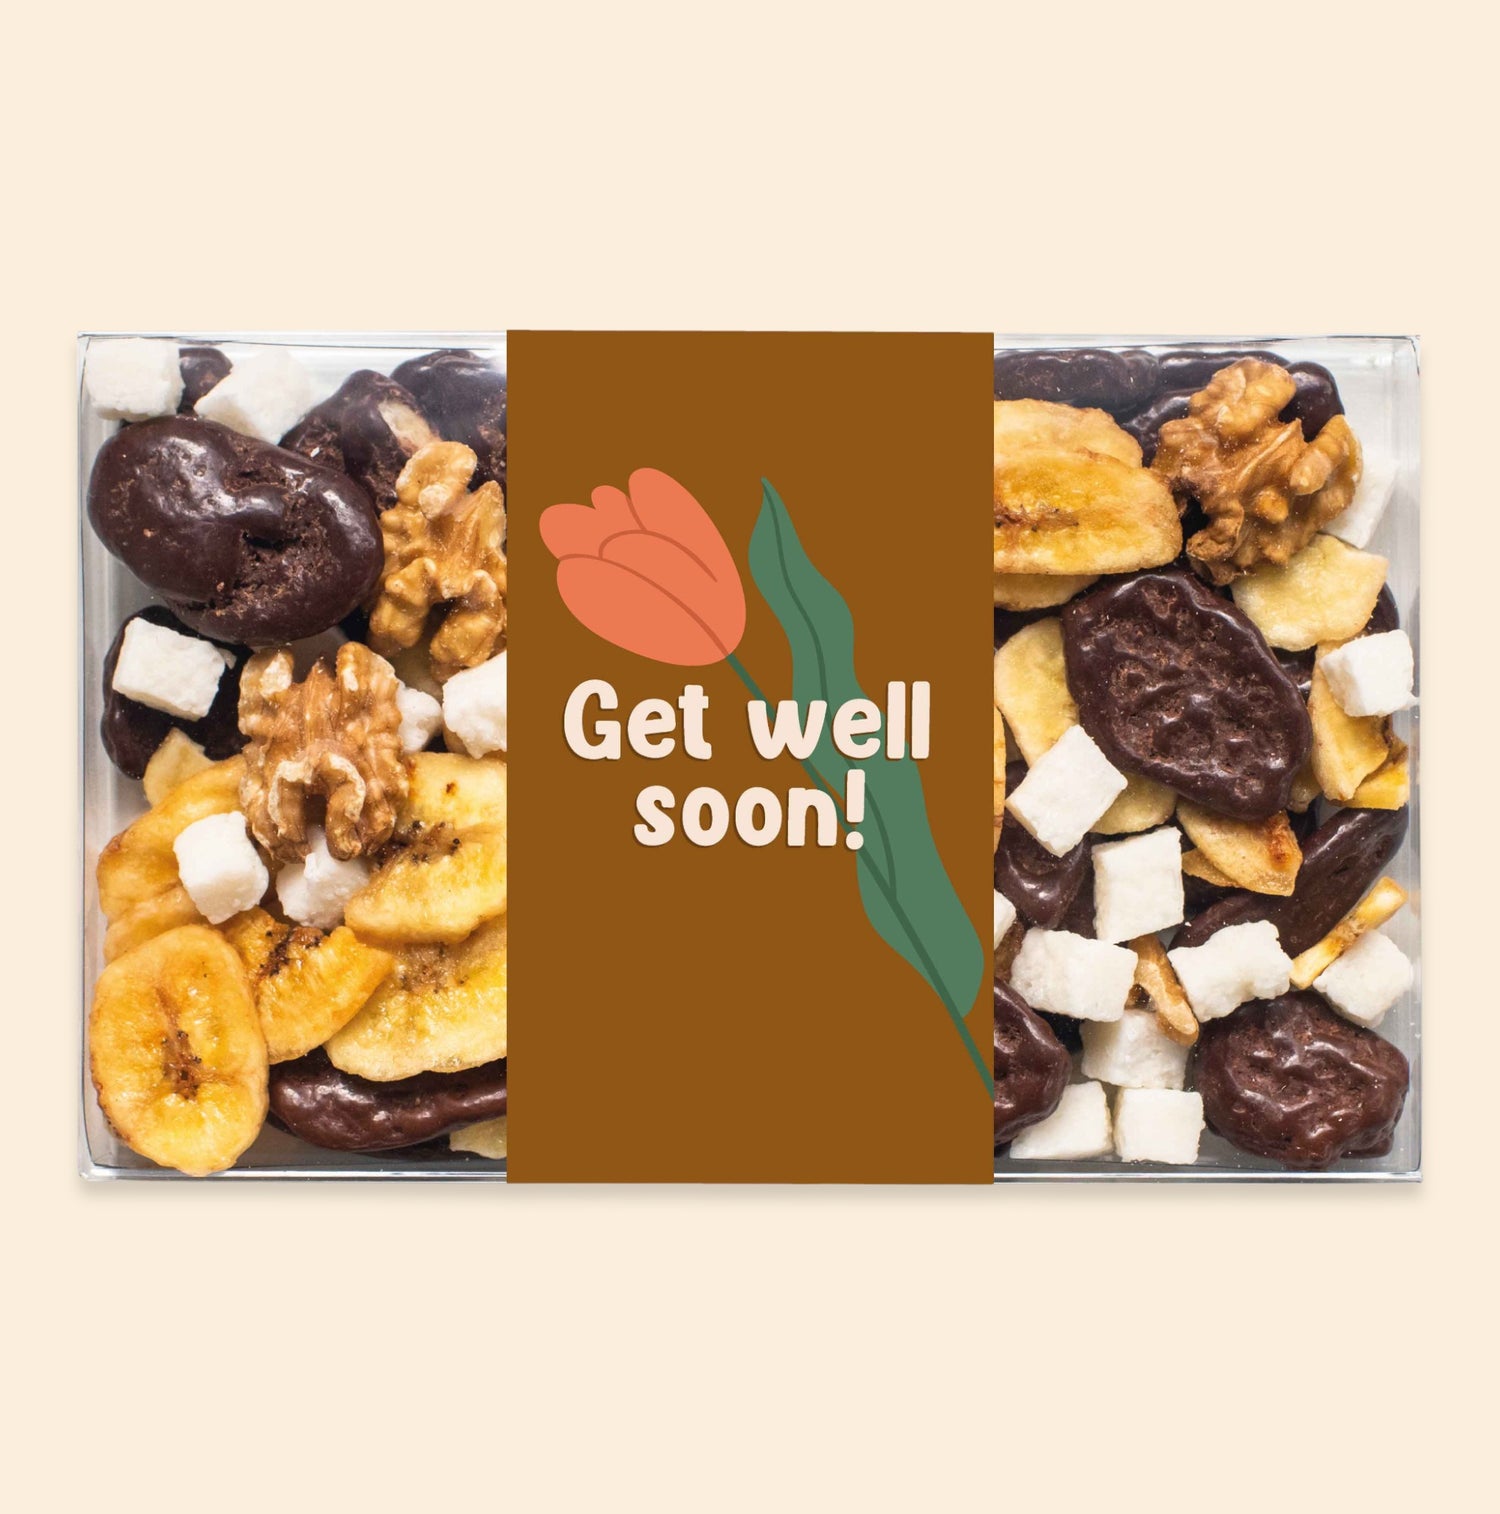 Choco banaan noten mix | Get well soon